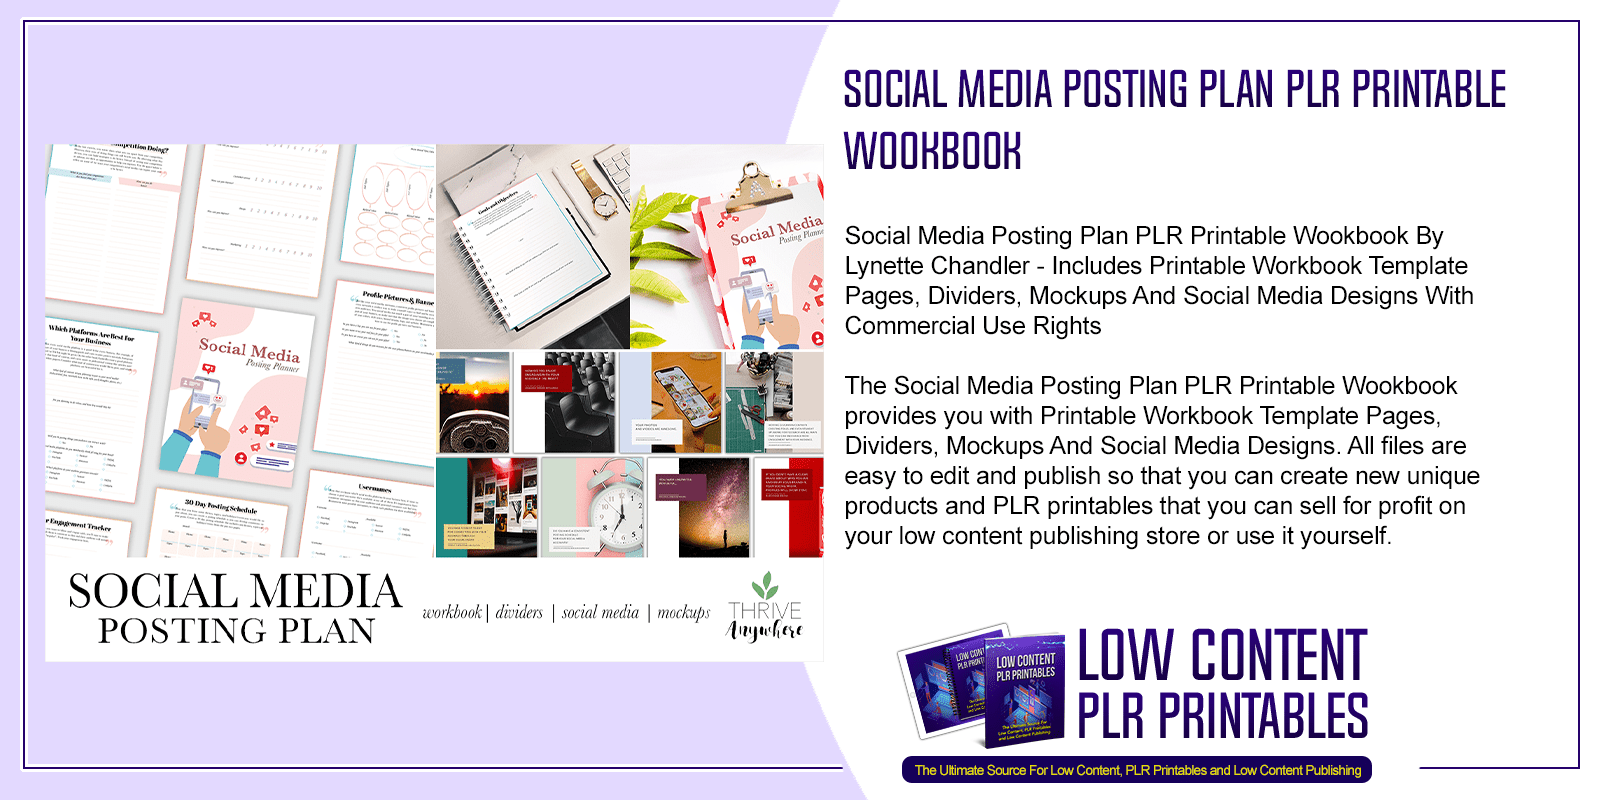 Social Media Posting Plan PLR Printable Wookbook